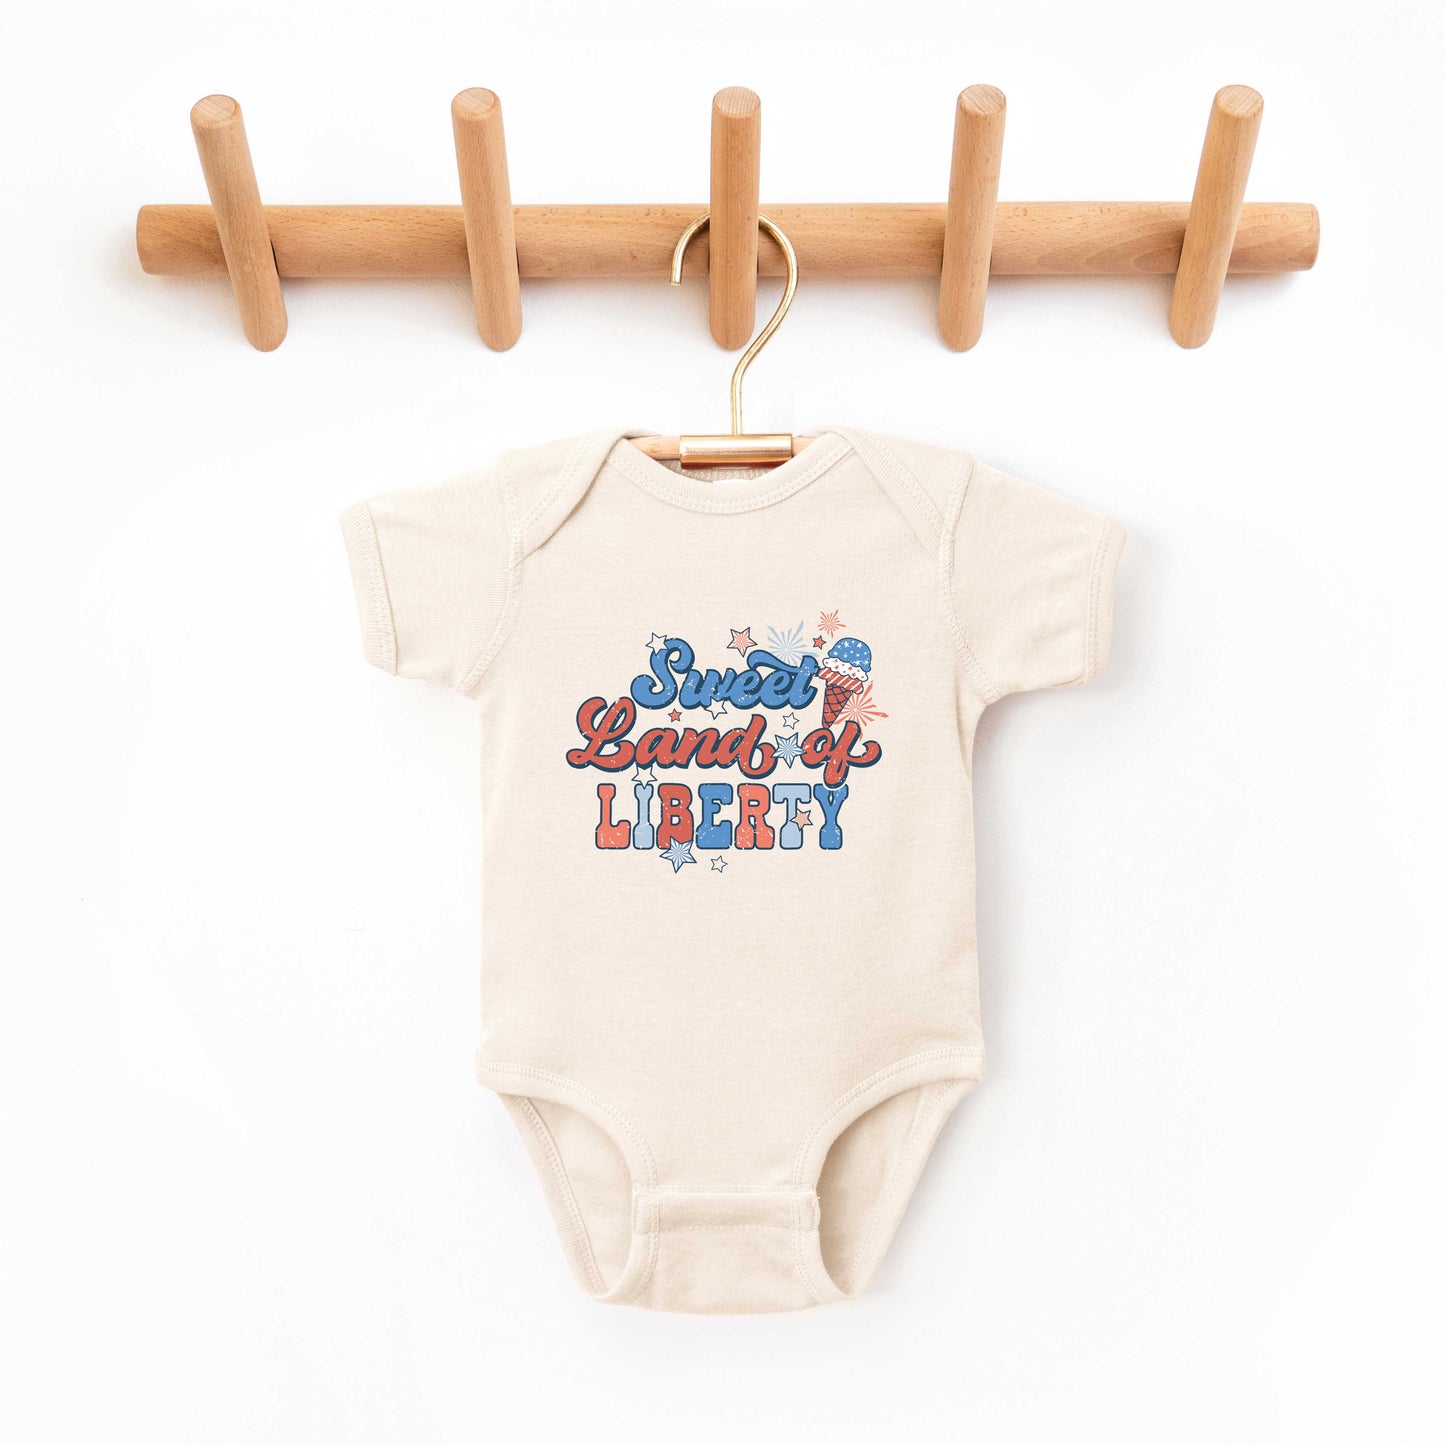 Retro Sweet Land Of Liberty | Baby Graphic Short Sleeve Onesie